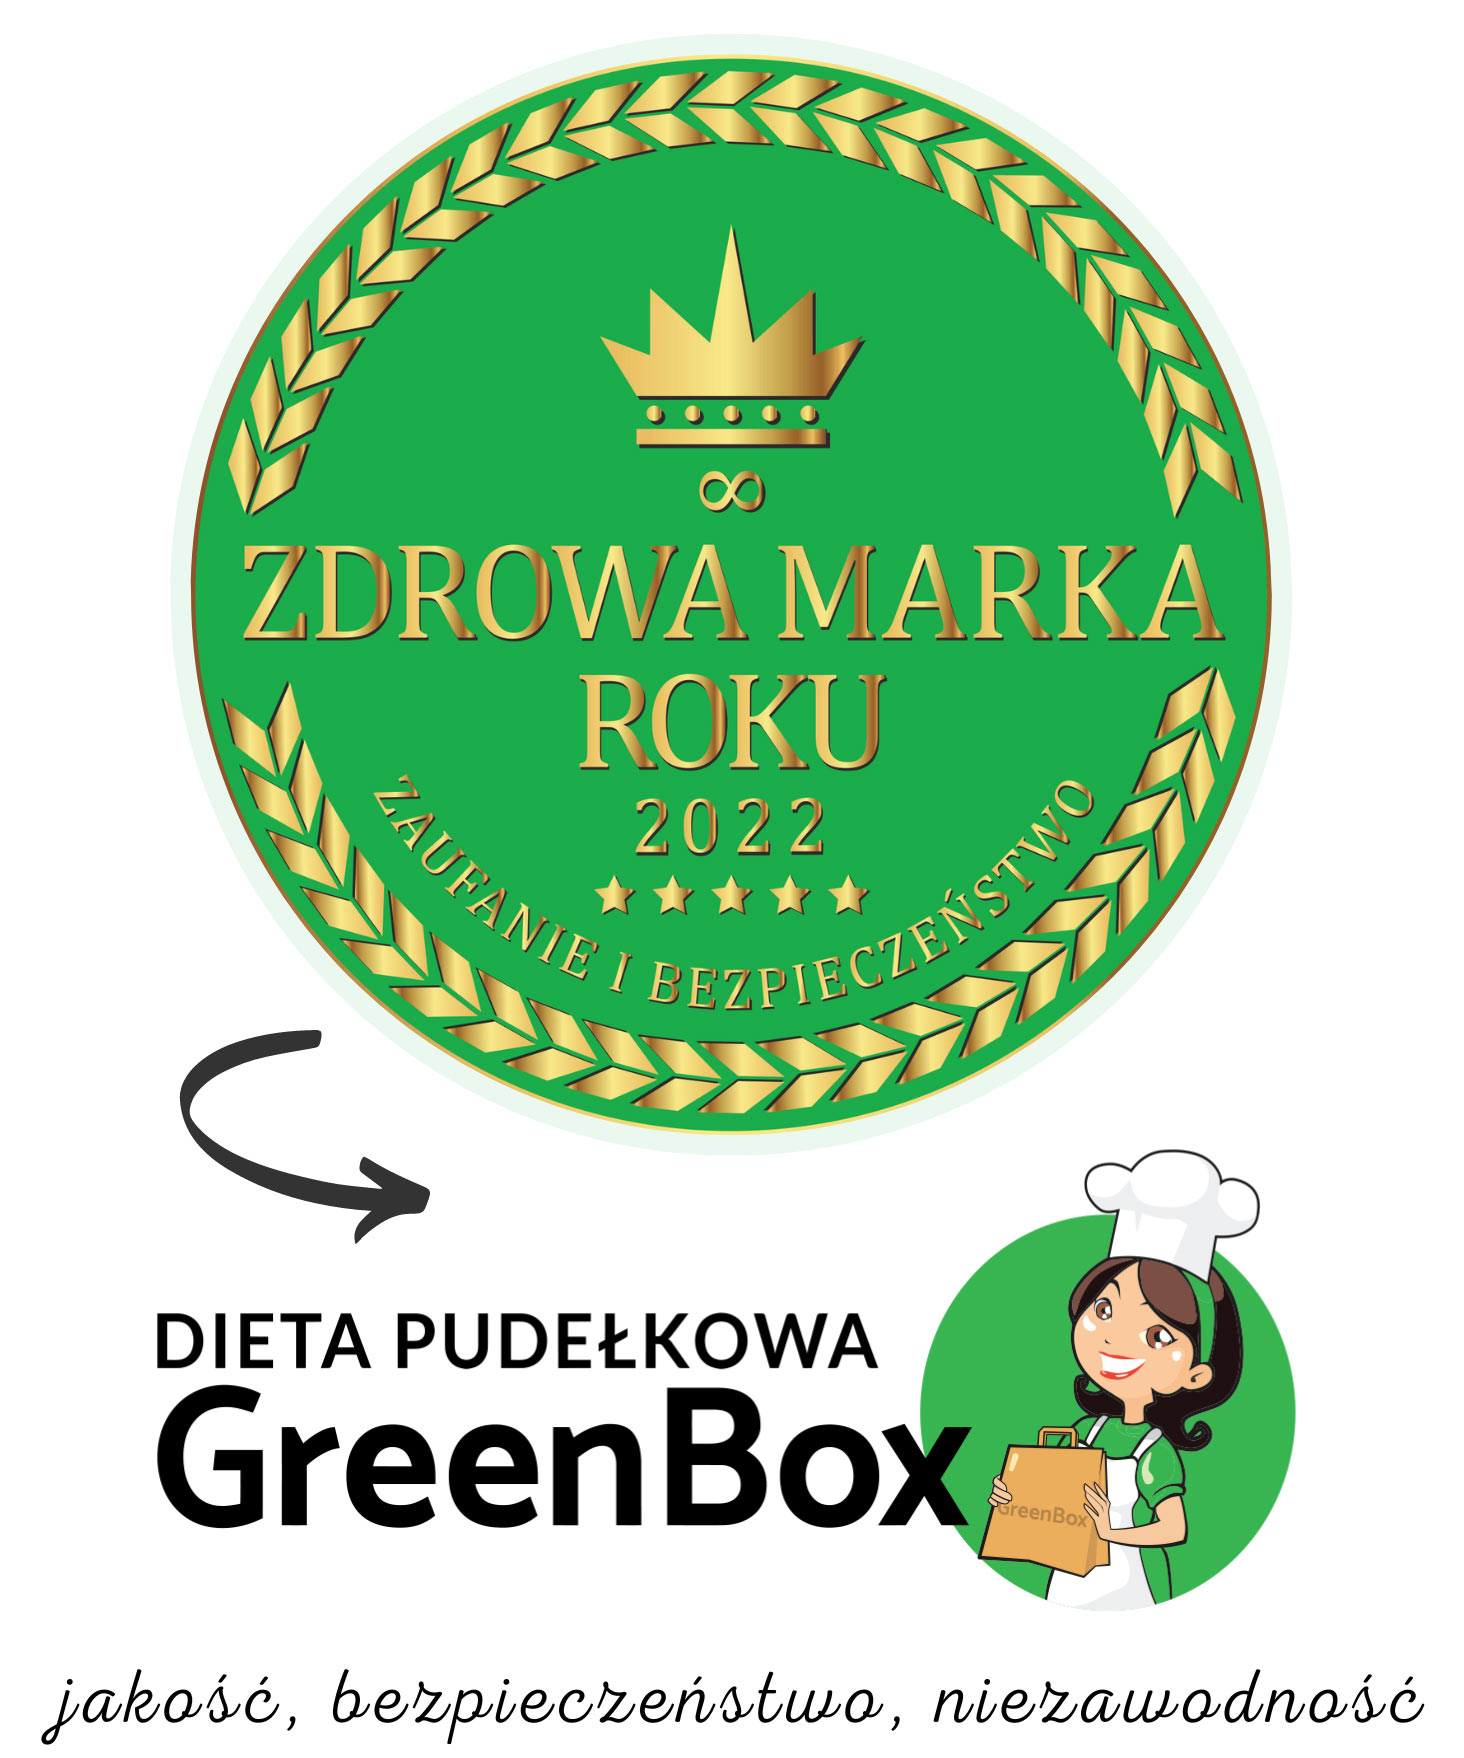 Zdrowa Marka Roku 2022 GreenBox z Mosiny